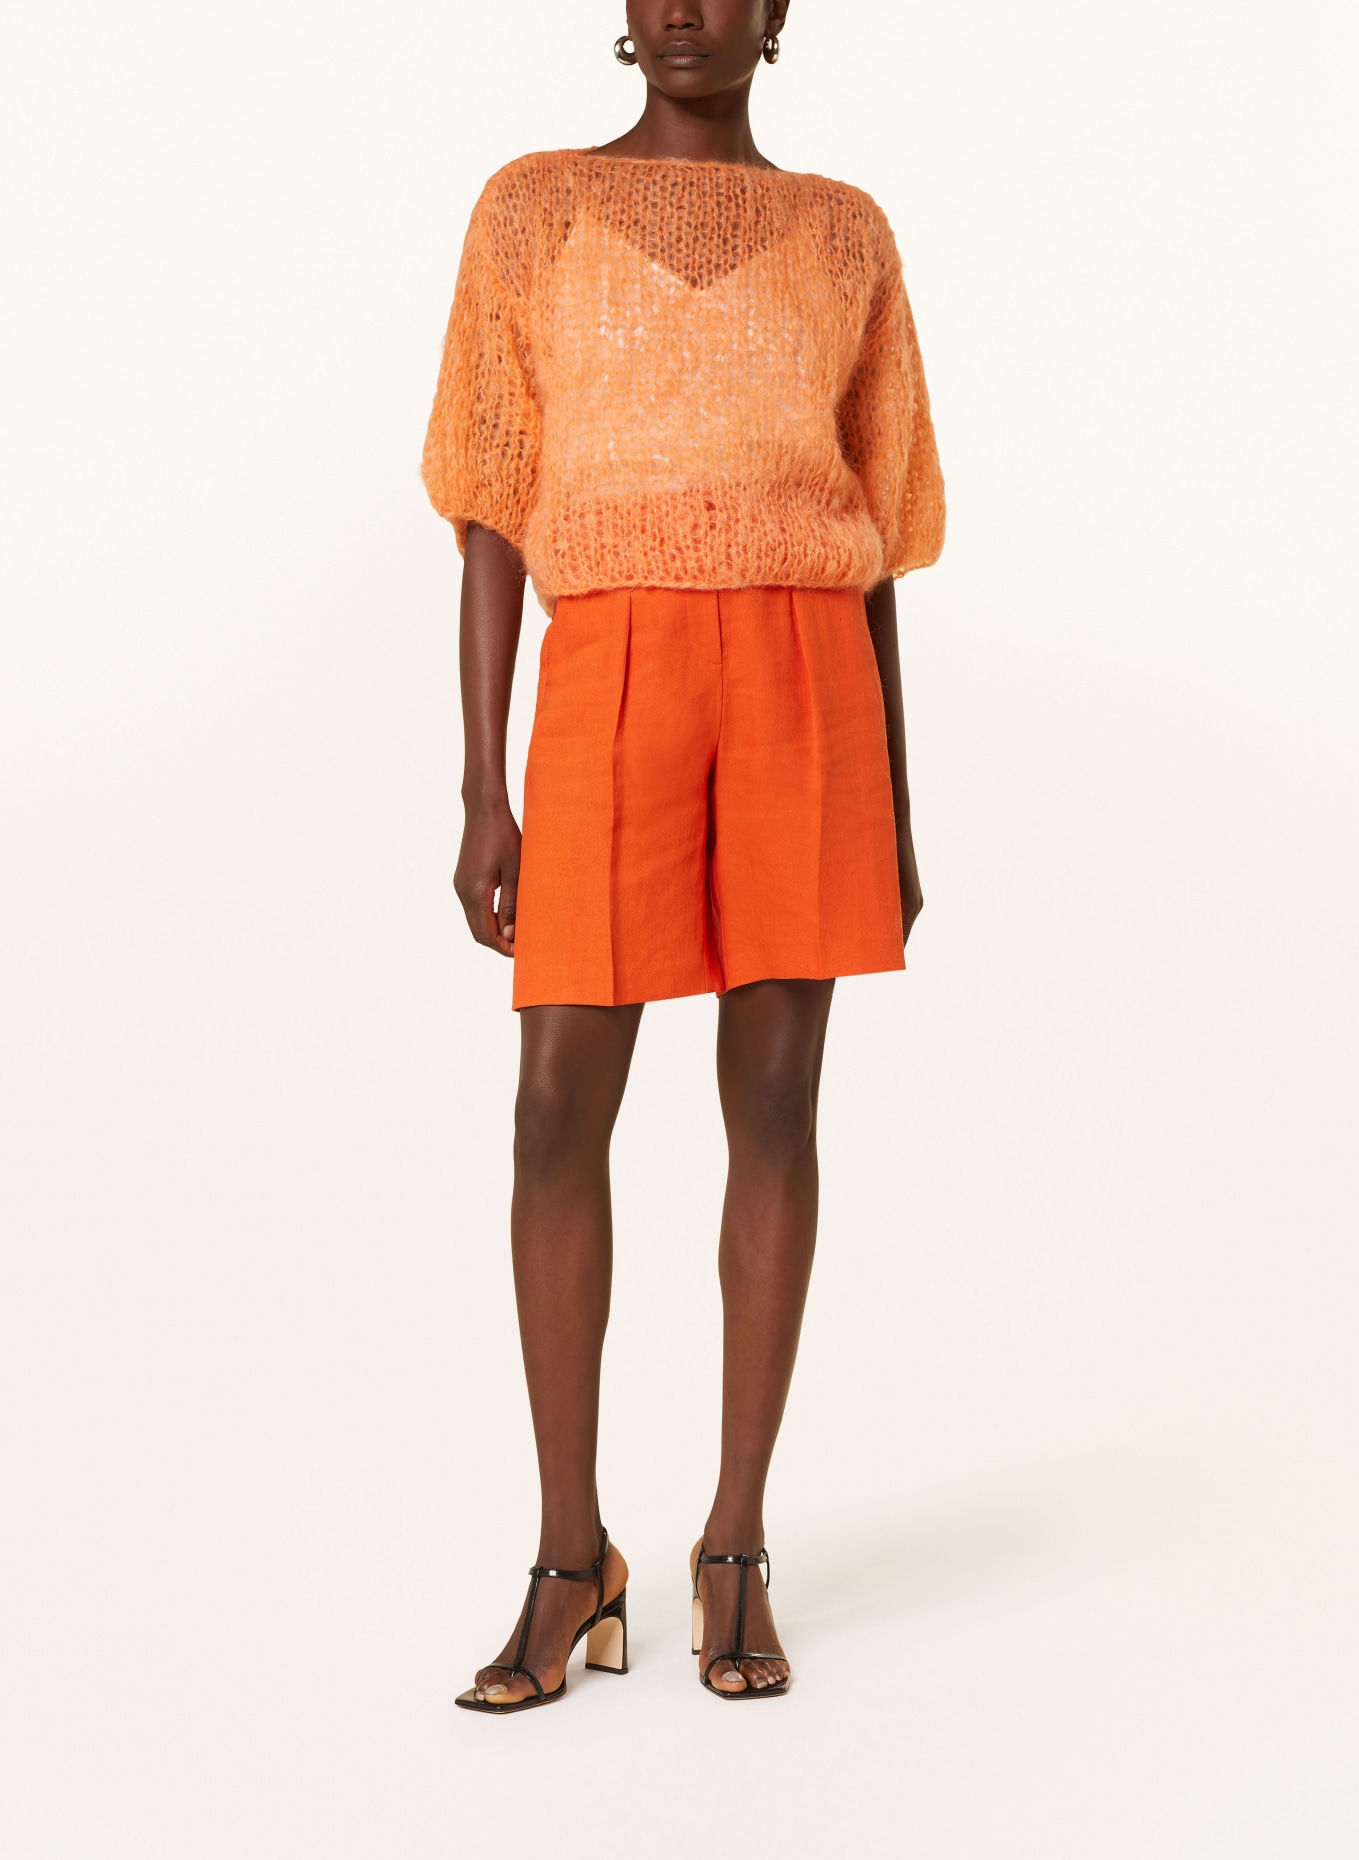 MAIAMI Mohair-Pullover mit 3/4-Arm, Farbe: ORANGE (Bild 2)